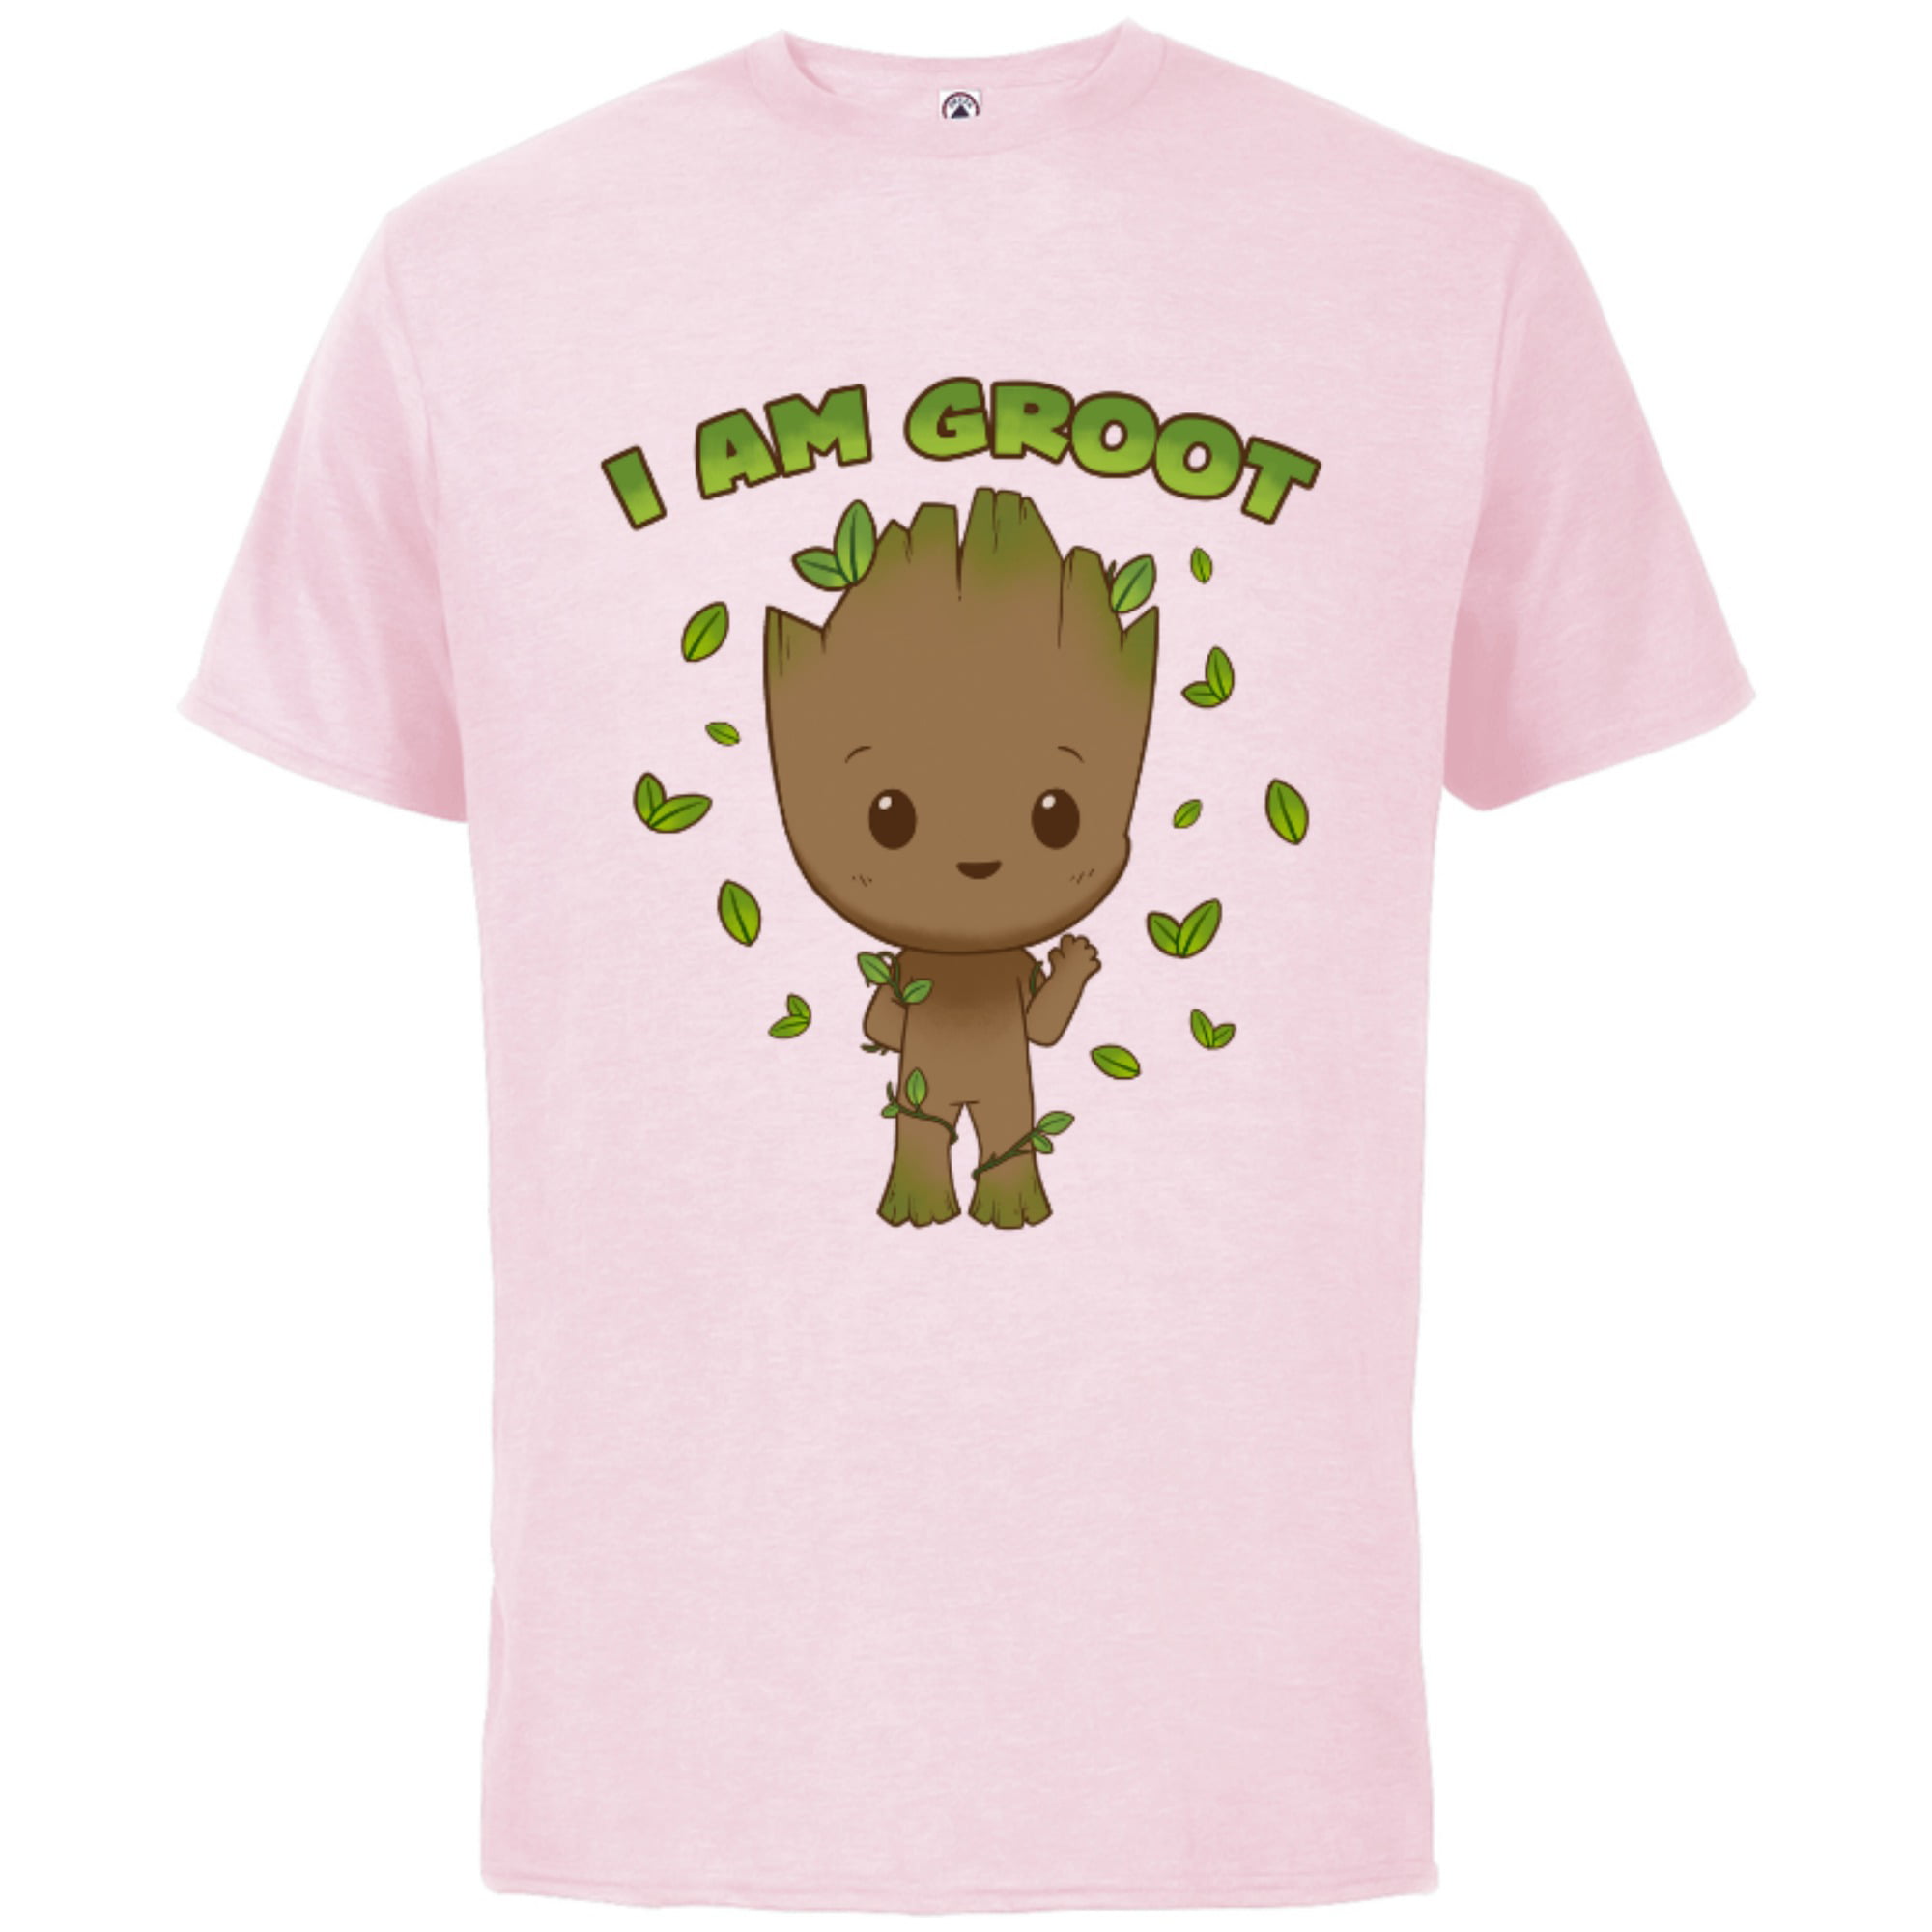 Damen T-Shirt Guardians of the Galaxy - I am Groot